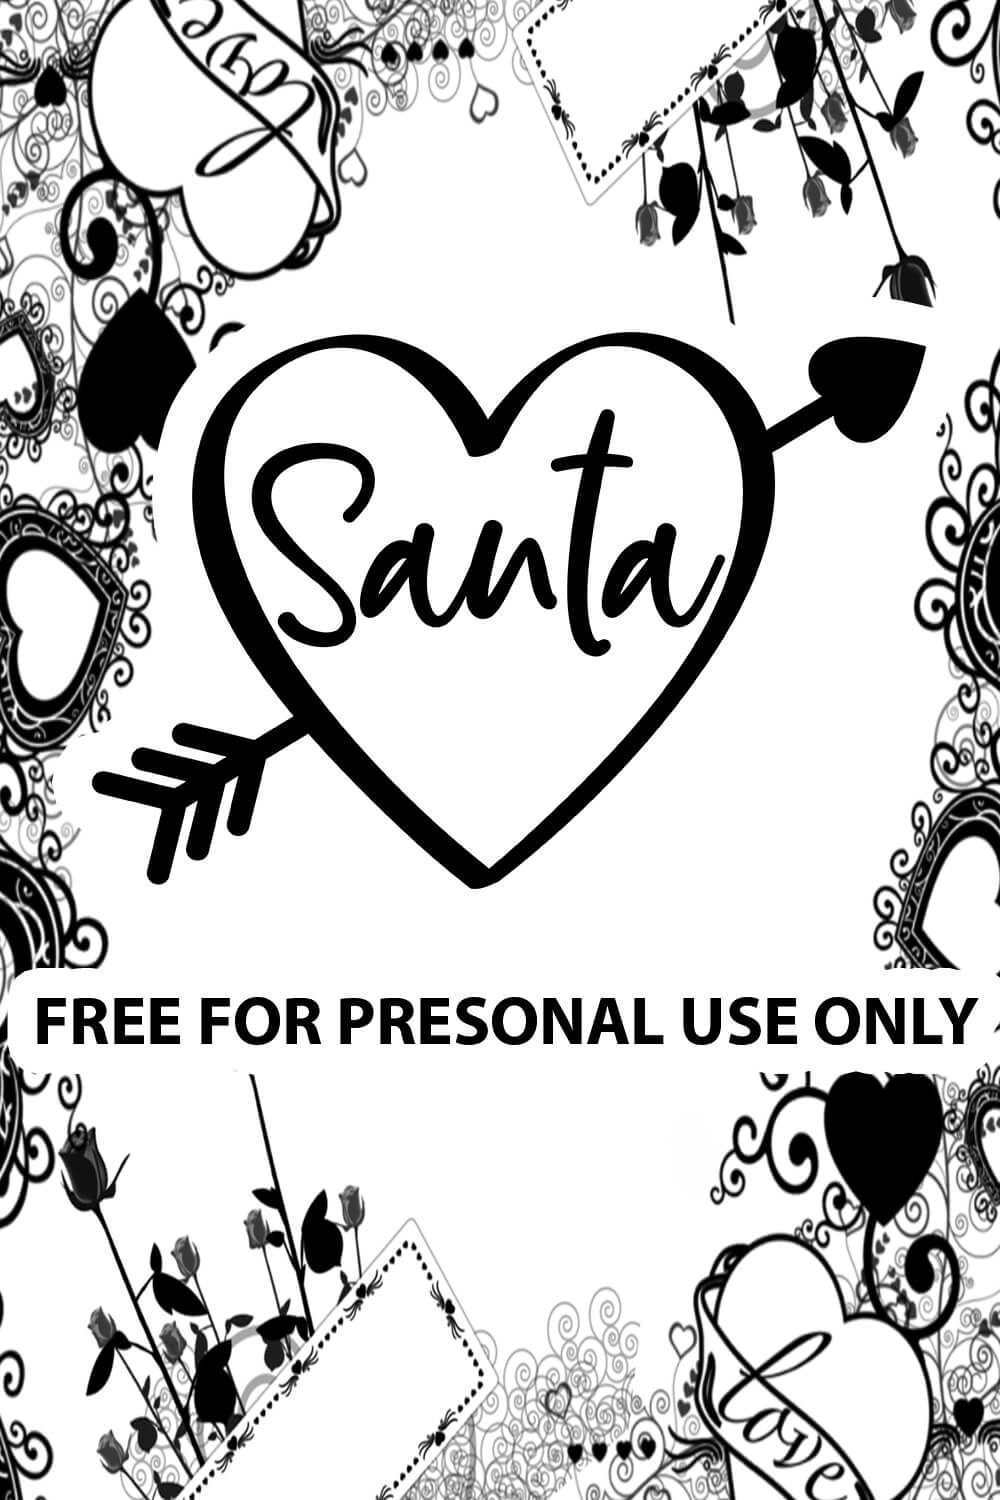 Santa love heart free SVG files pinterest image.